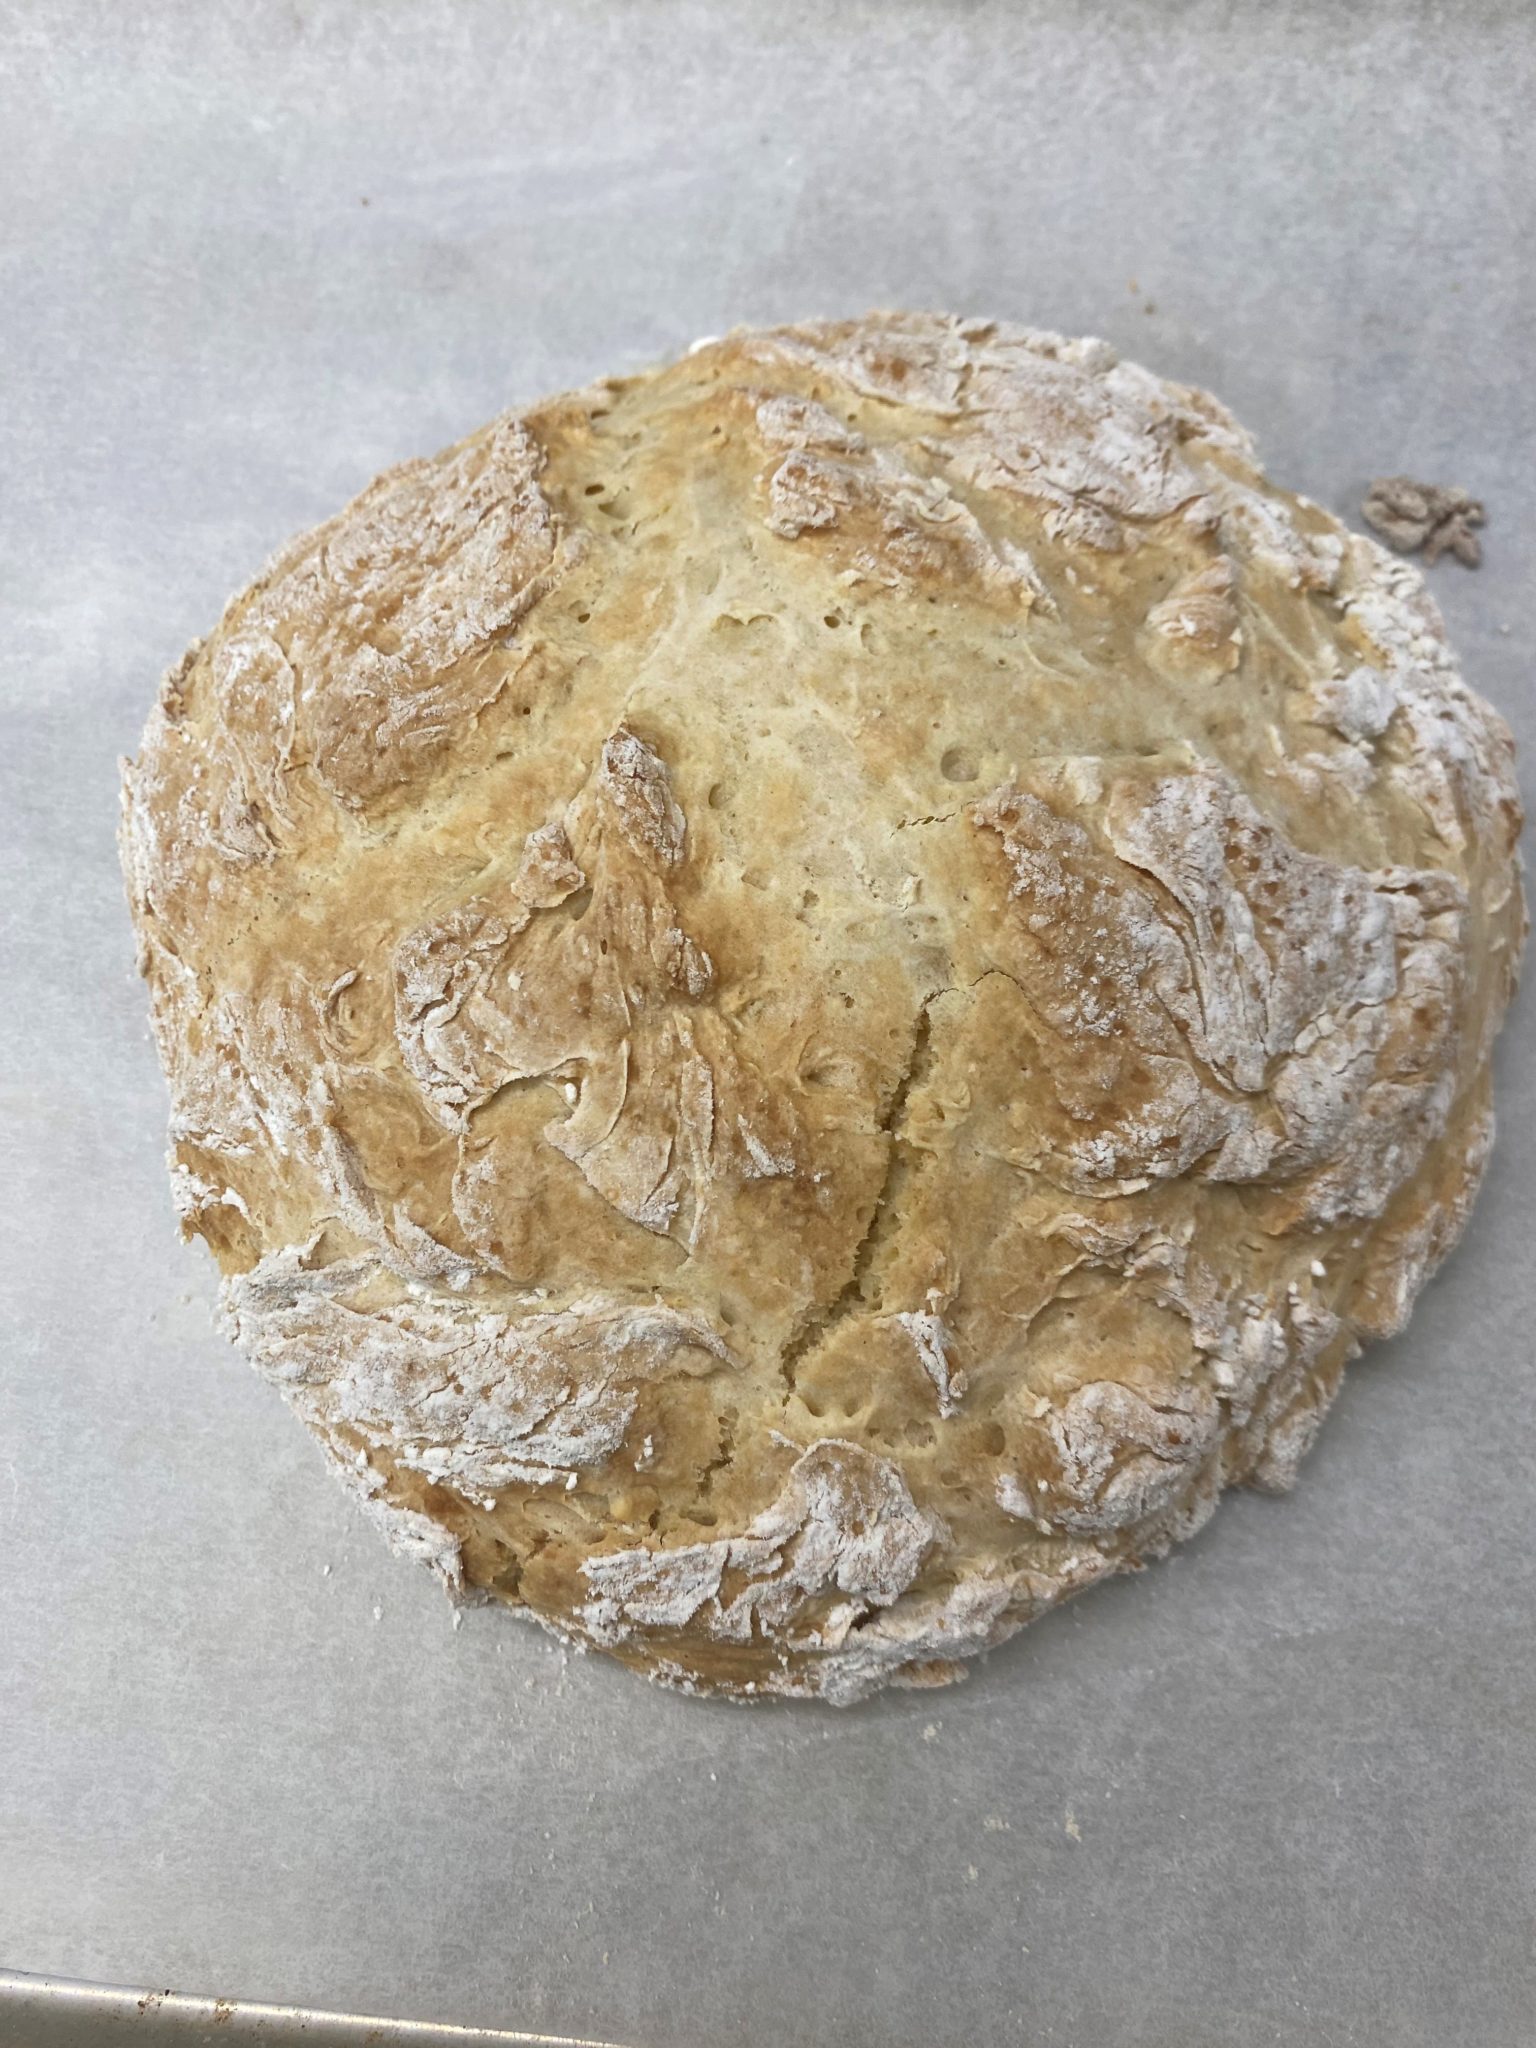 Picture of homemade soda bread